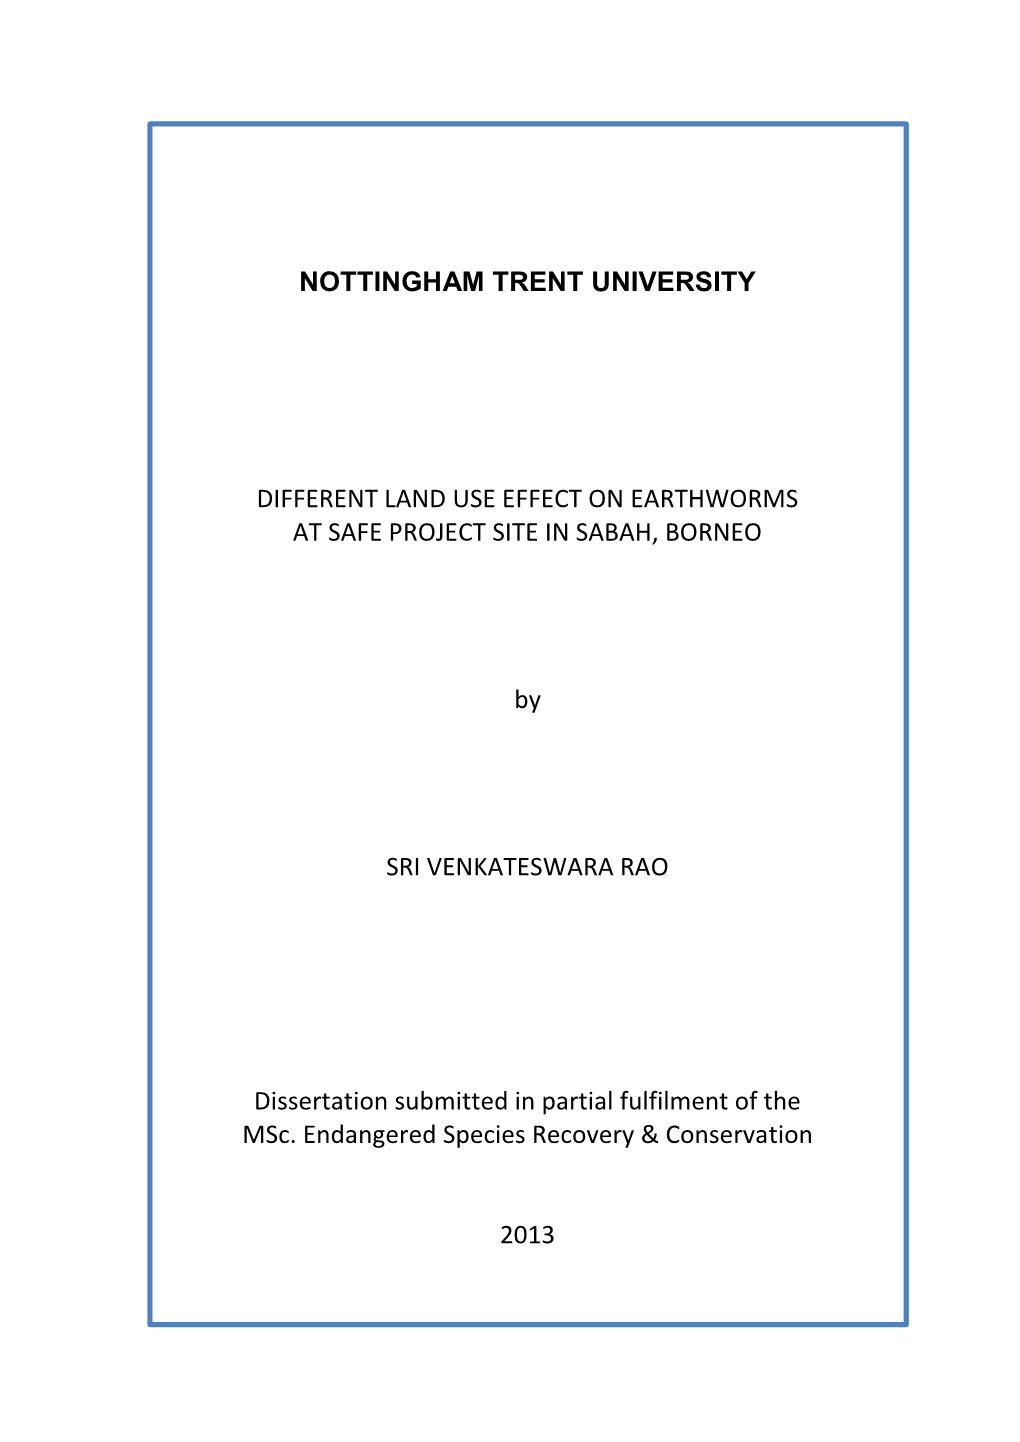 Nottingham Trent University Different Land Use Effect